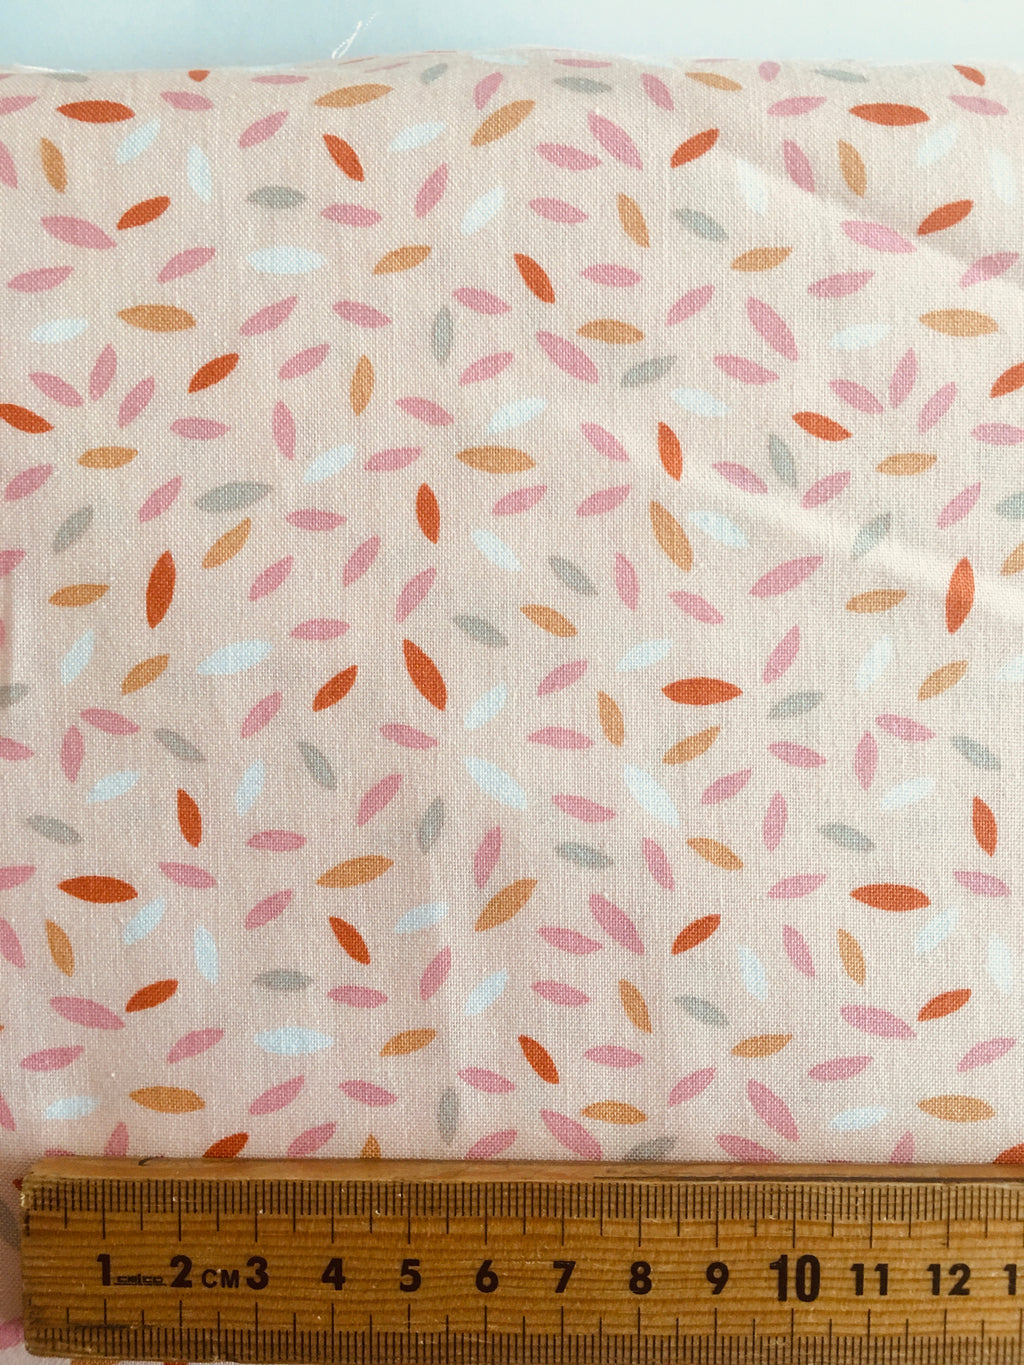 Windham Fabrics: Kenzie on Pink